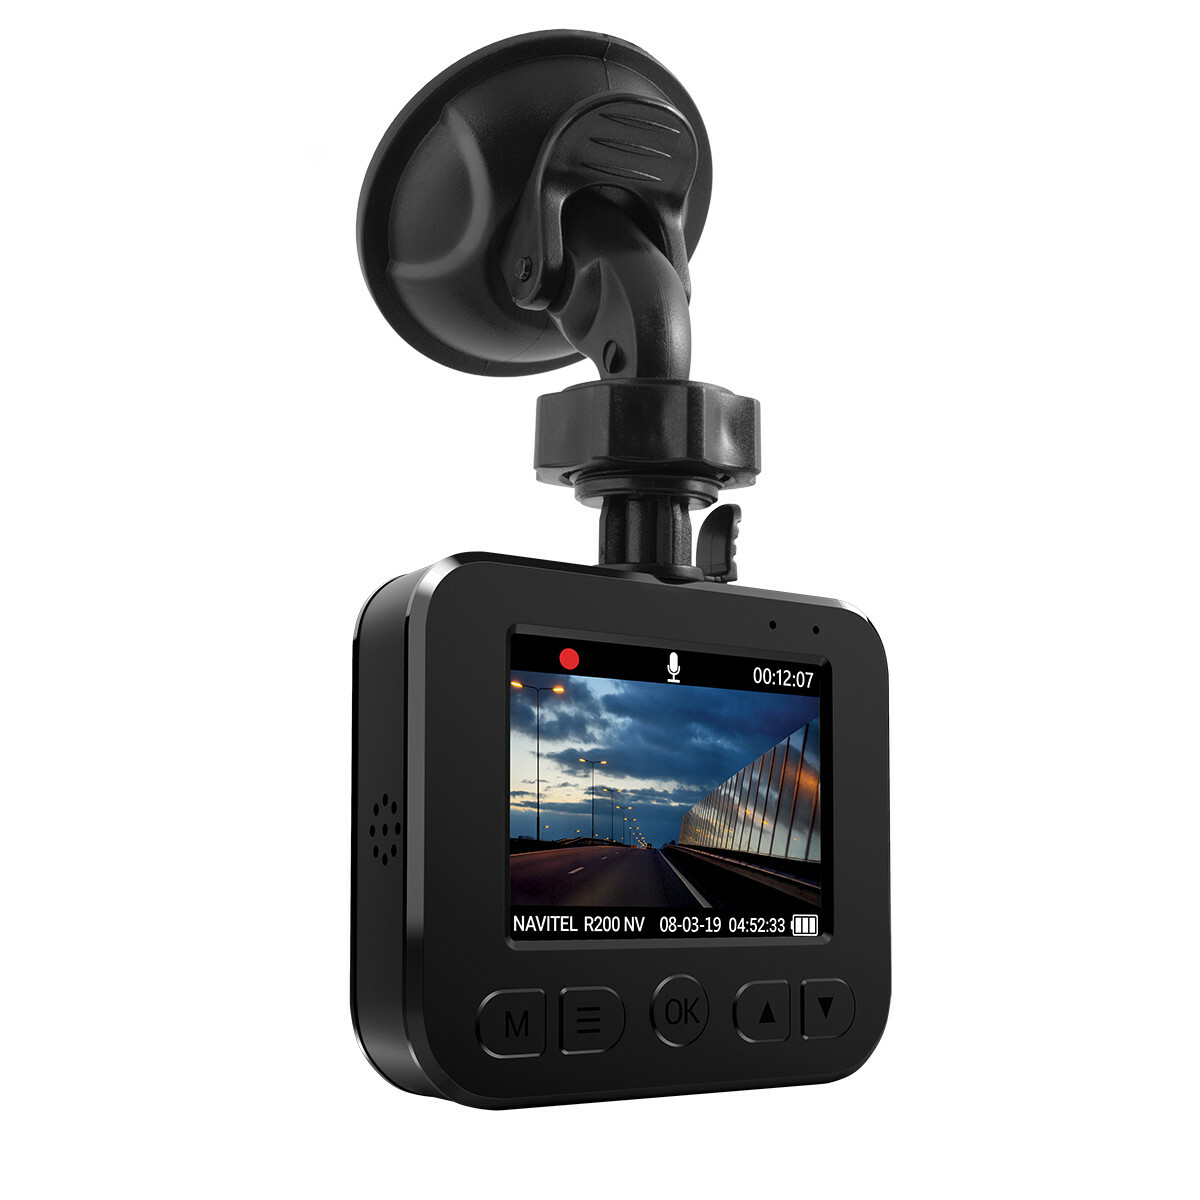 Navitel R200NV Car Video Recorder